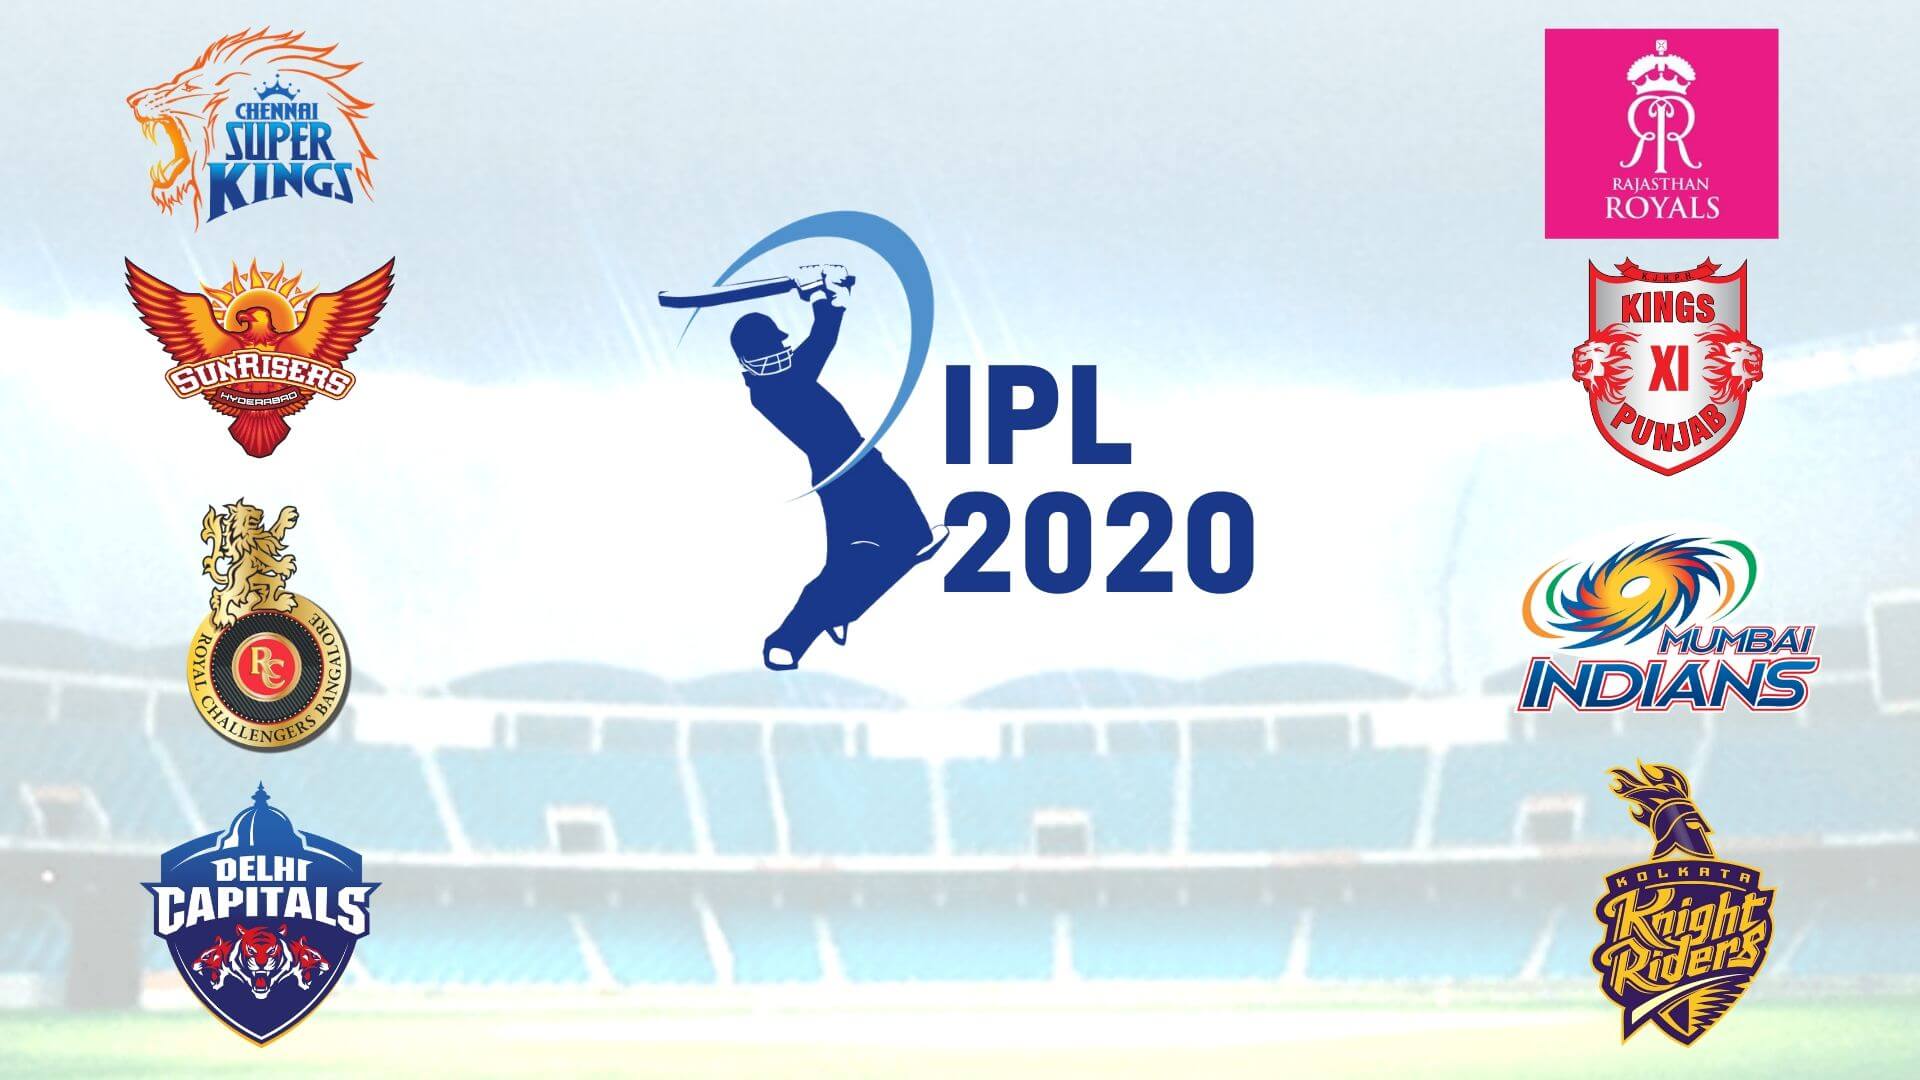 IPL 2020 poster